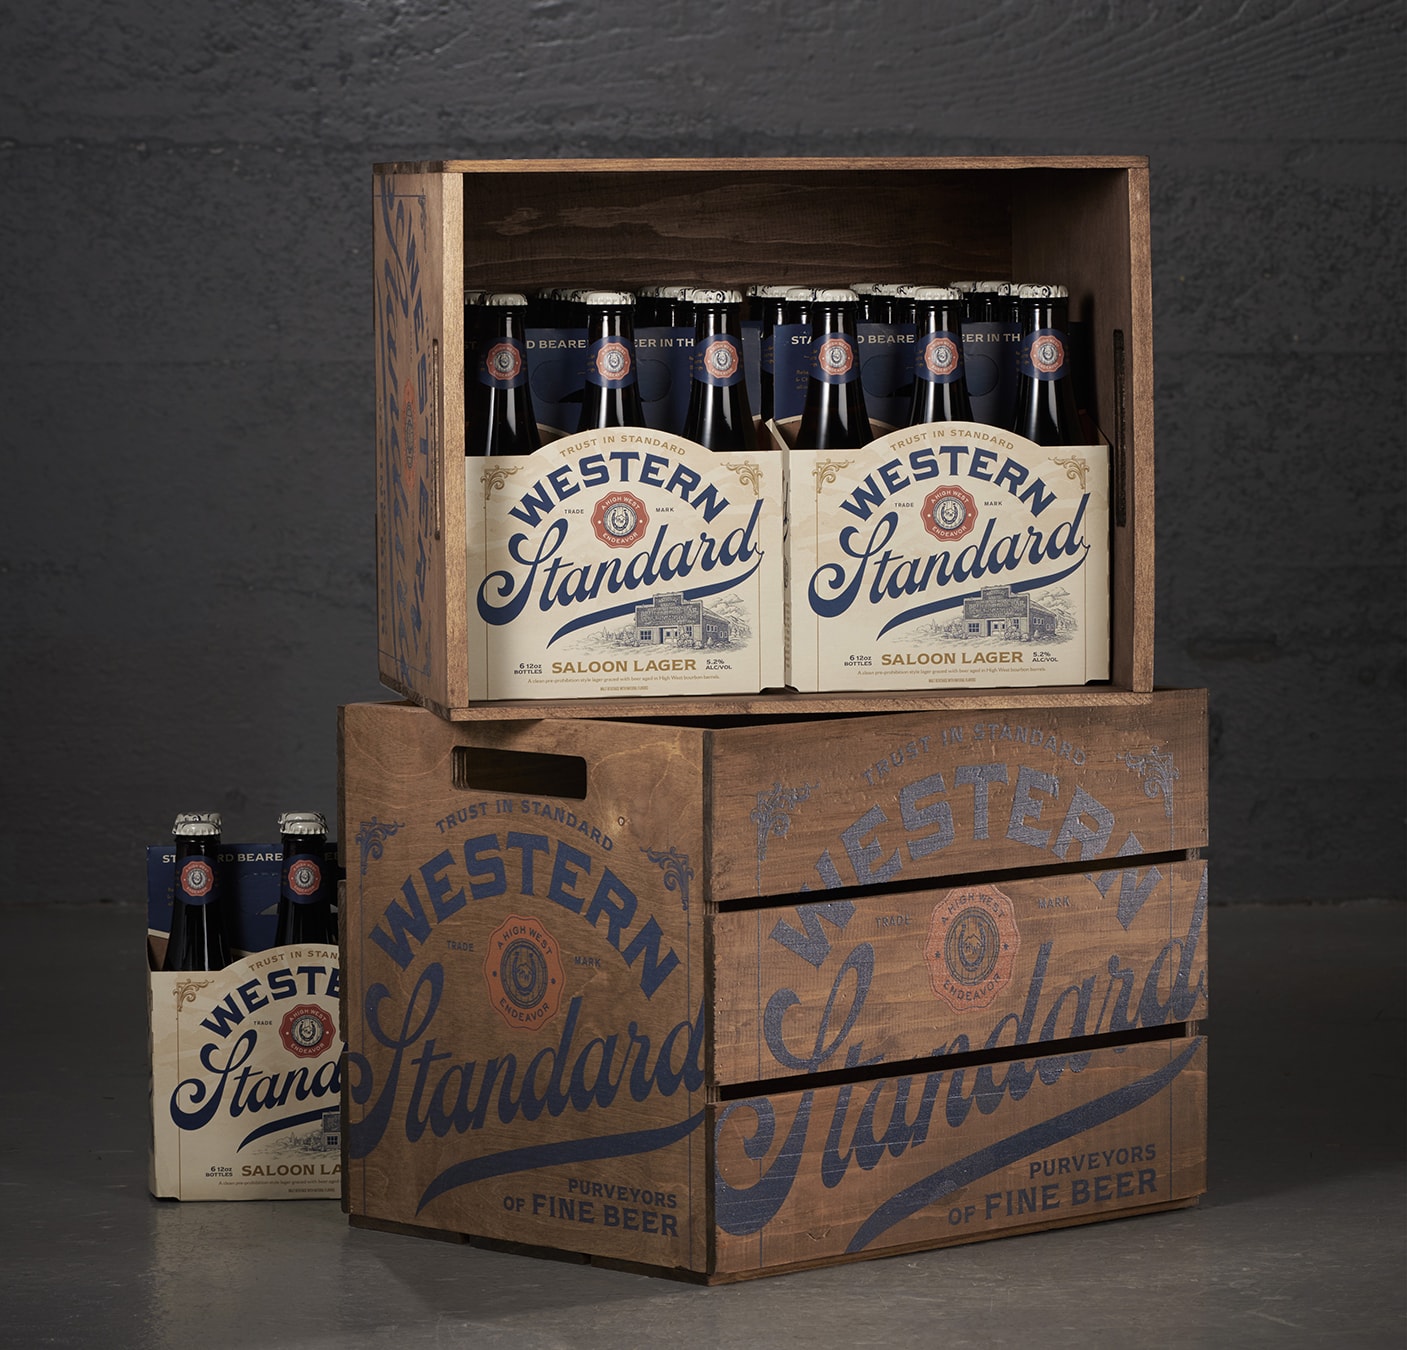 Western Standard branded wooden beer crate design